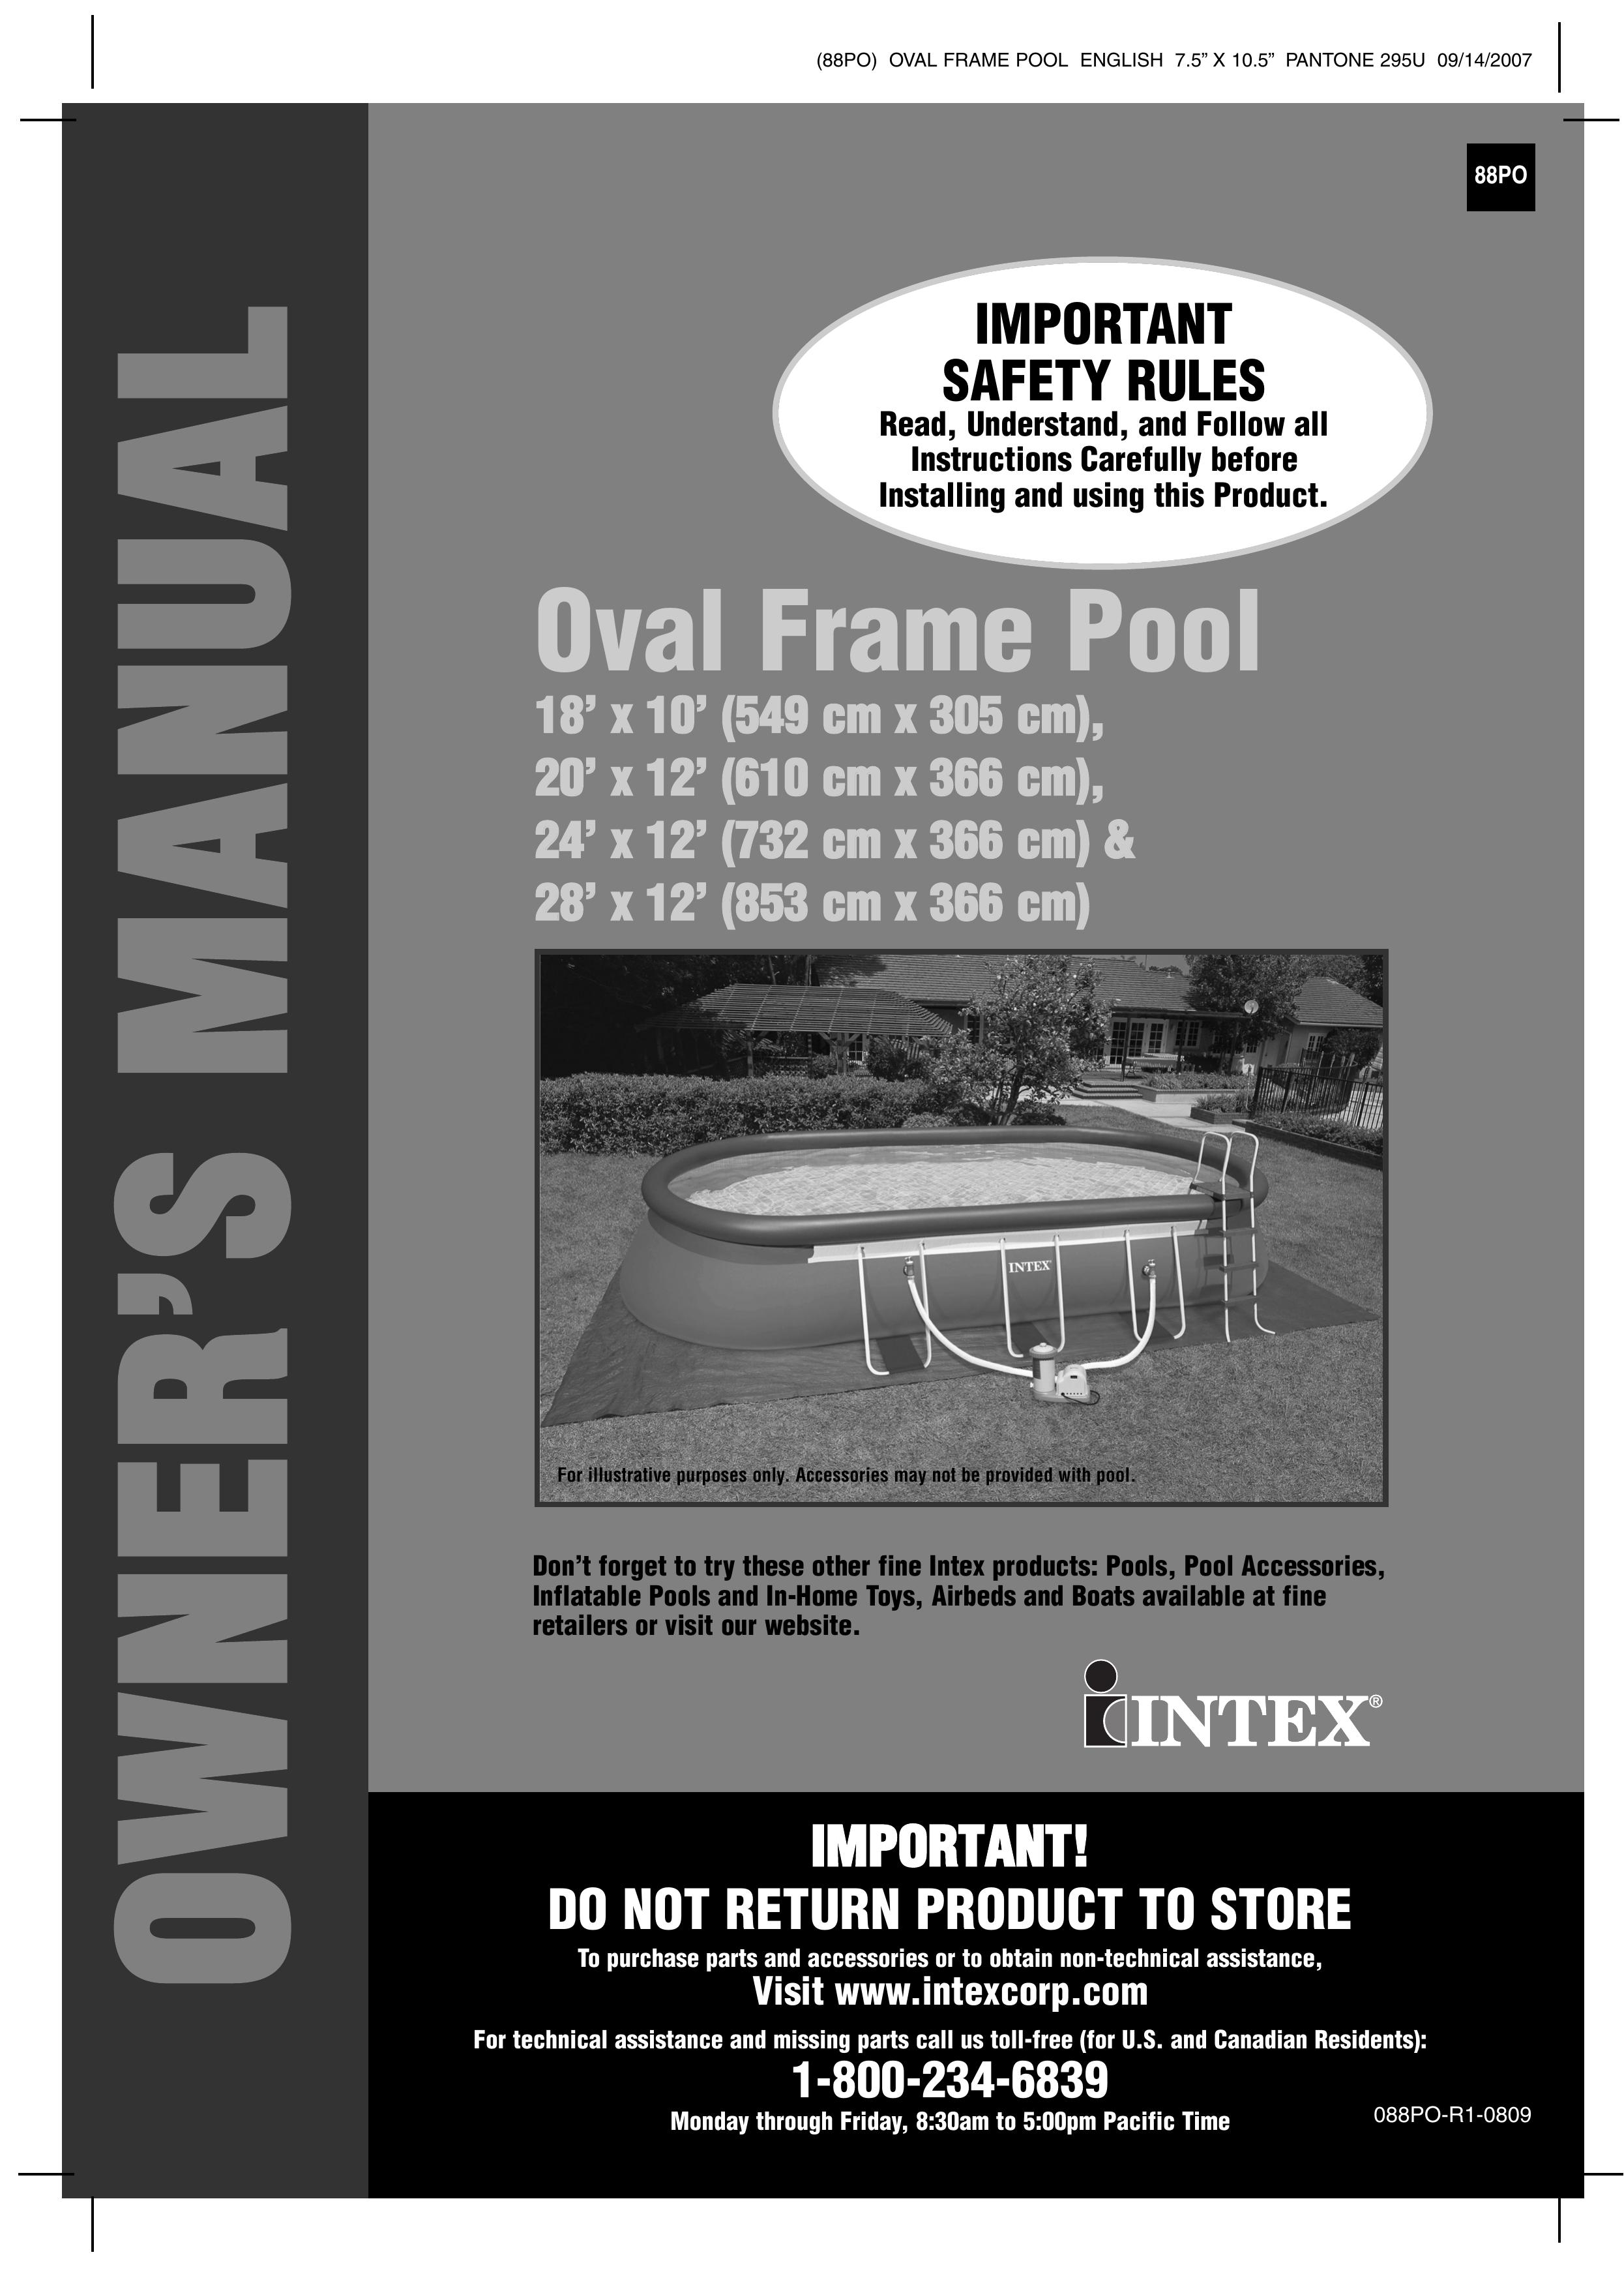 Intex Recreation 88PO Swimming Pool User Manual